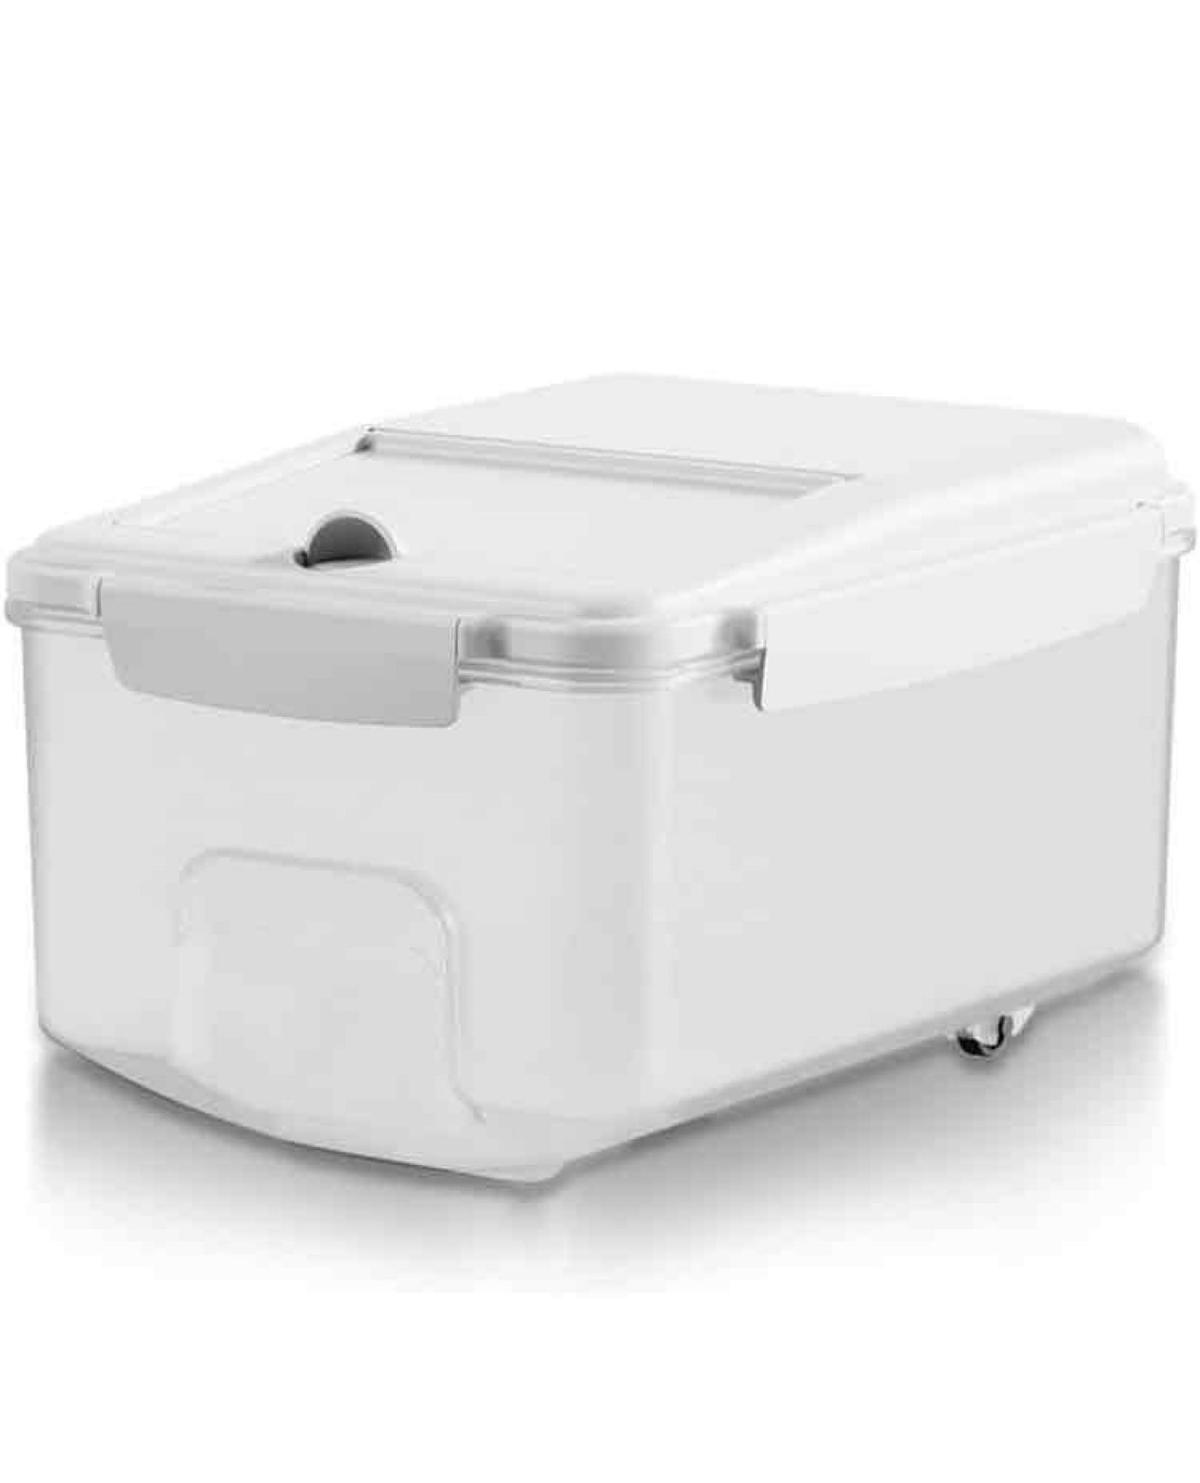 Rice Dispenser - 25lbs/10.6qt/10kg Food Flour Storage Bins with Lids & Cup BPA Free Kitchen Extra